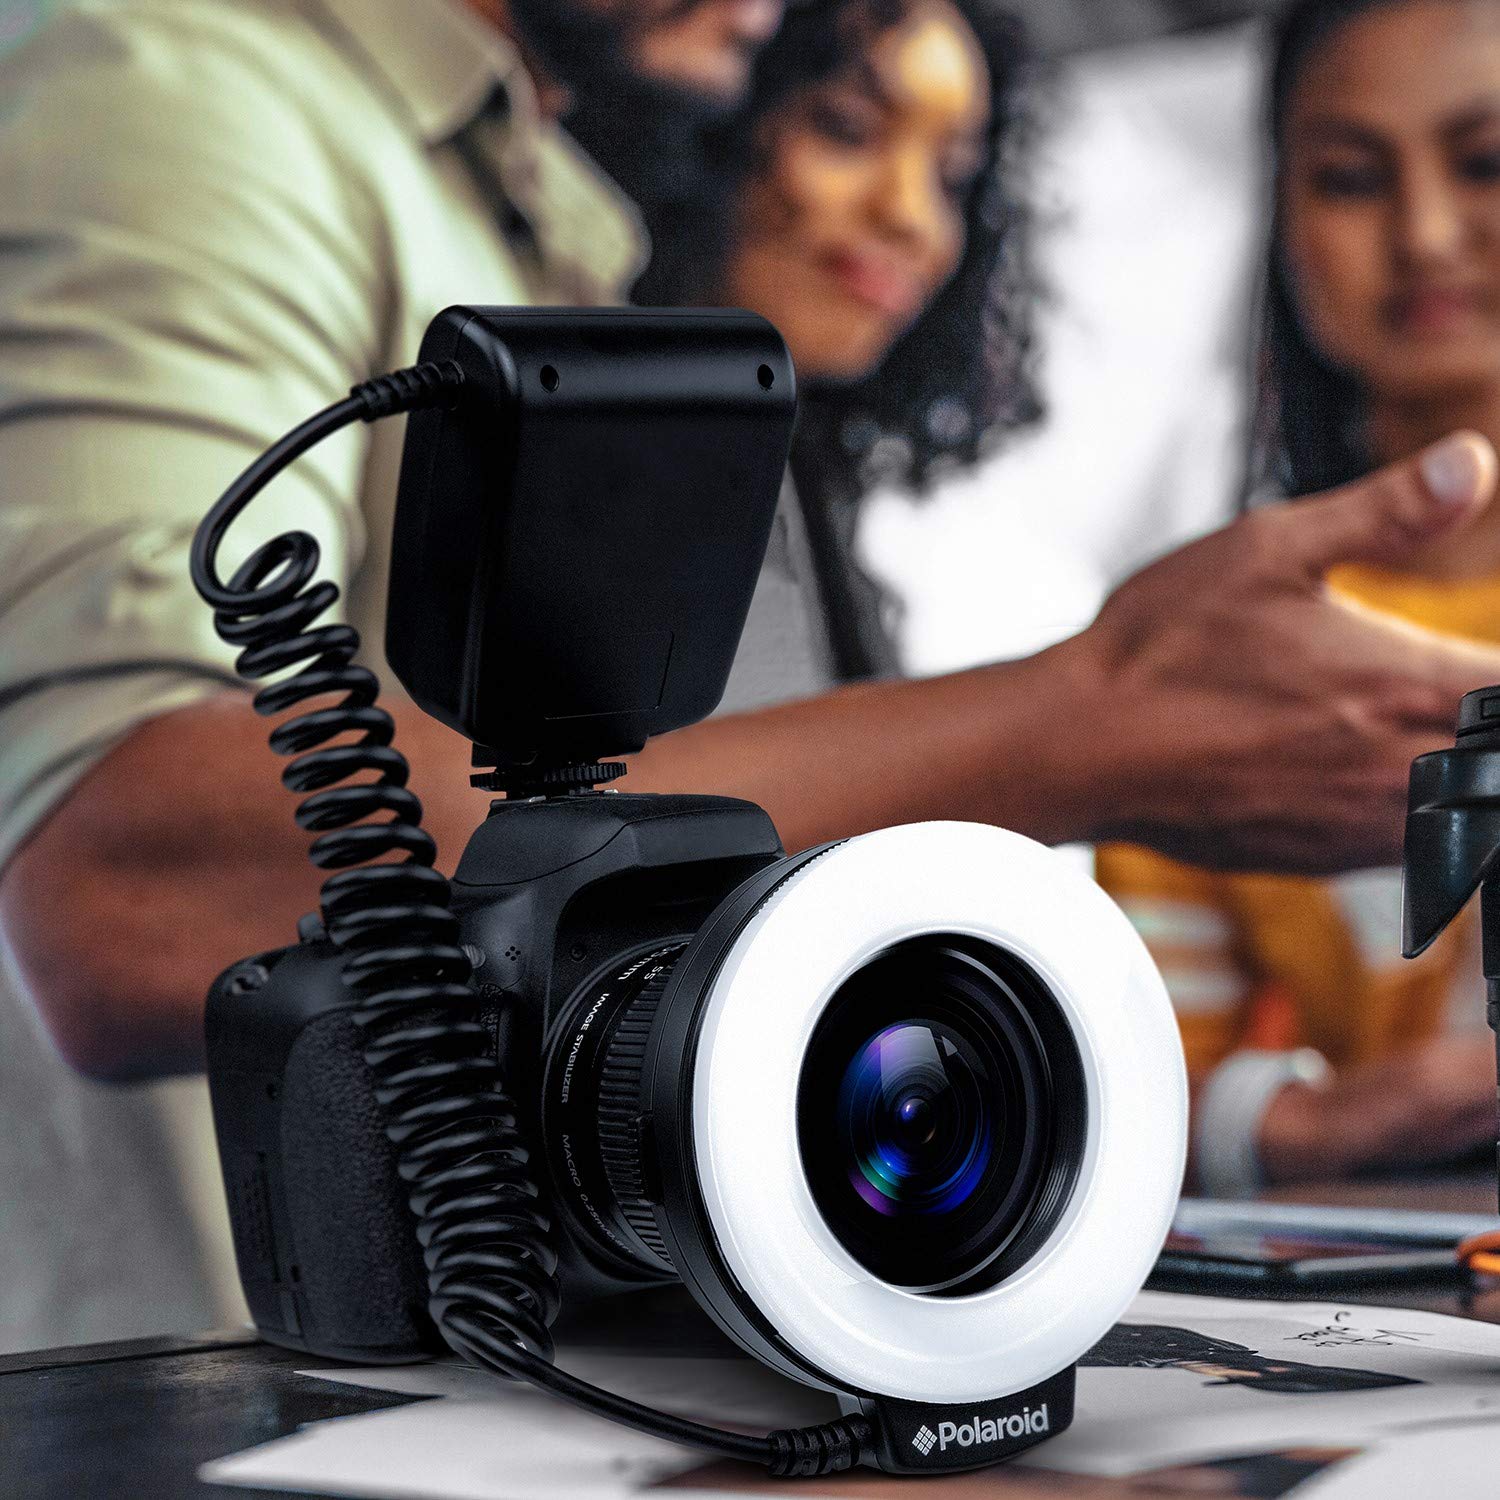 Polaroid 48 Macro LED Ring Flash & Light Includes 4 Diffusers (Clear, Warming, Blue, White) For Canon, Nikon, Panasonic, Olympus, Pentax SLR Camera